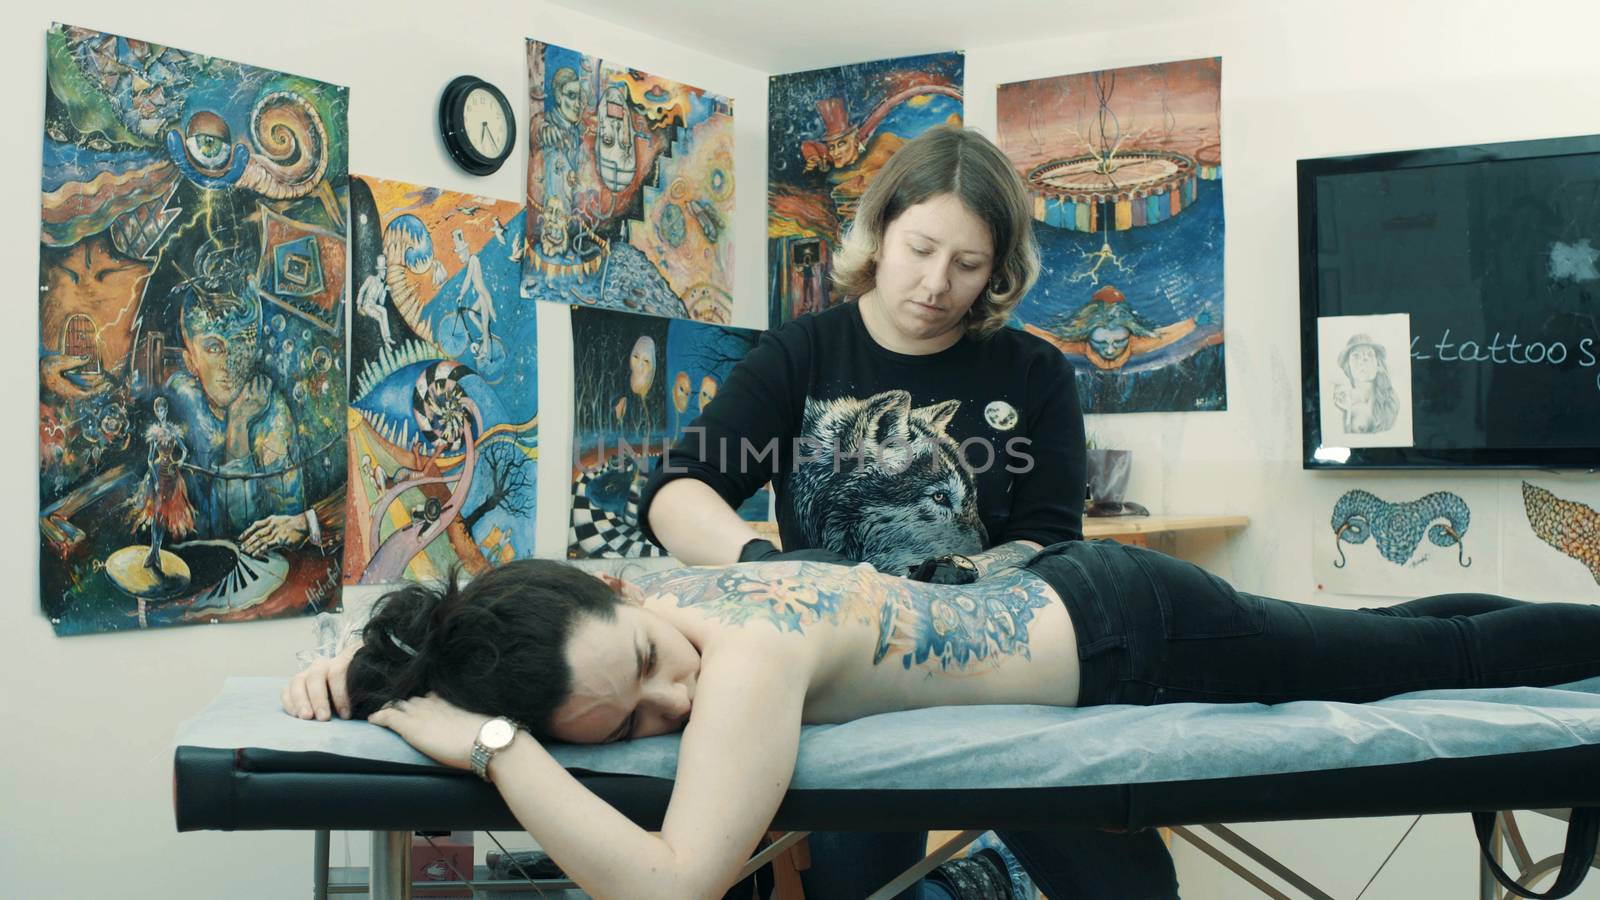 Master tattooist holding a tattoo machine making a tattoo on the girl's back.